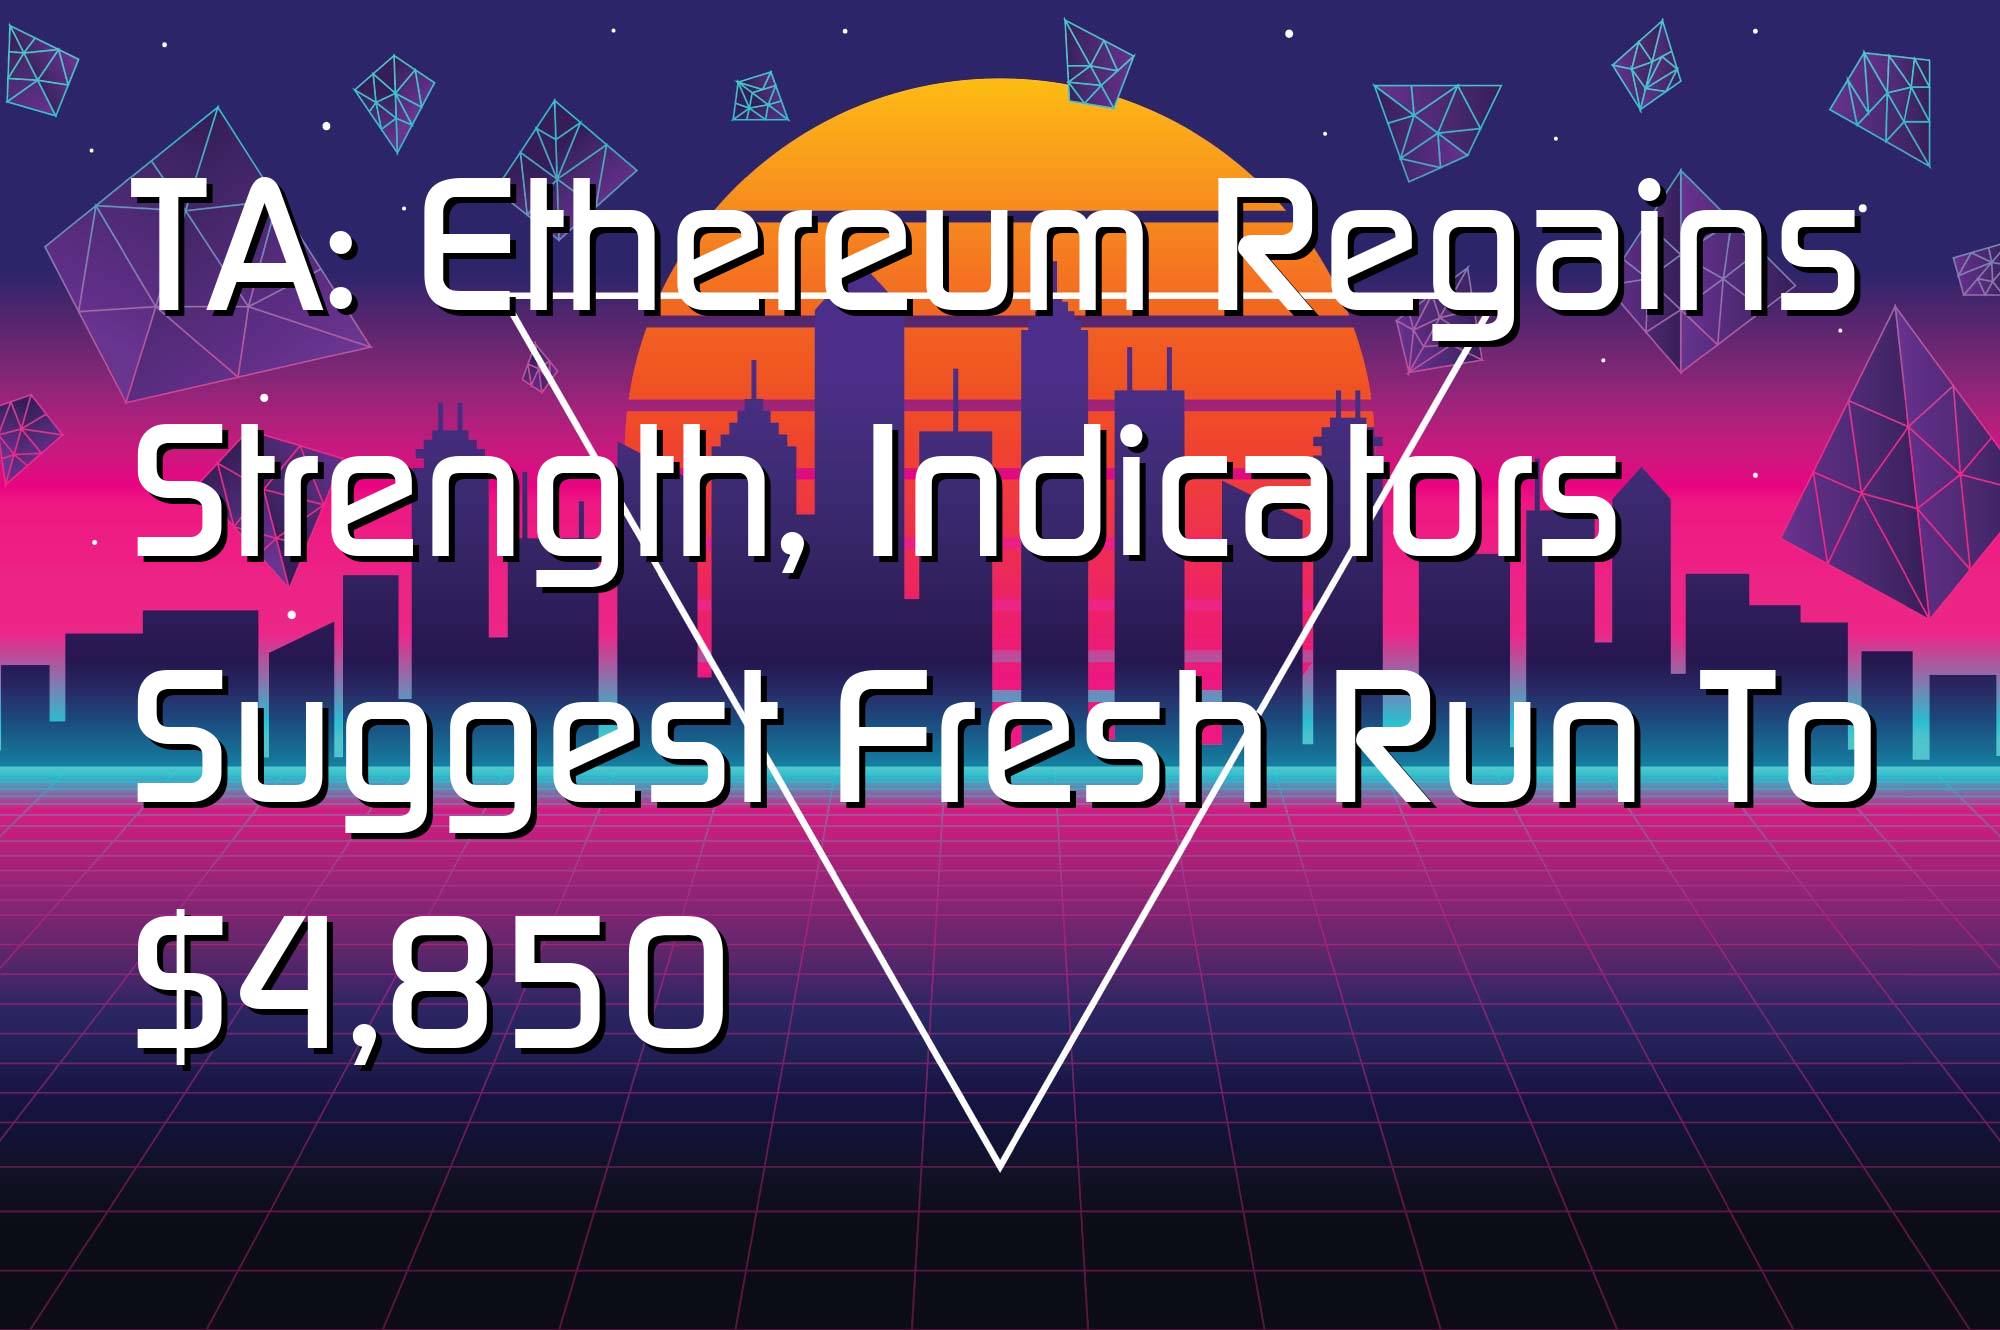 @$65665: TA: Ethereum Regains Strength, Indicators Suggest Fresh Run To $4,850